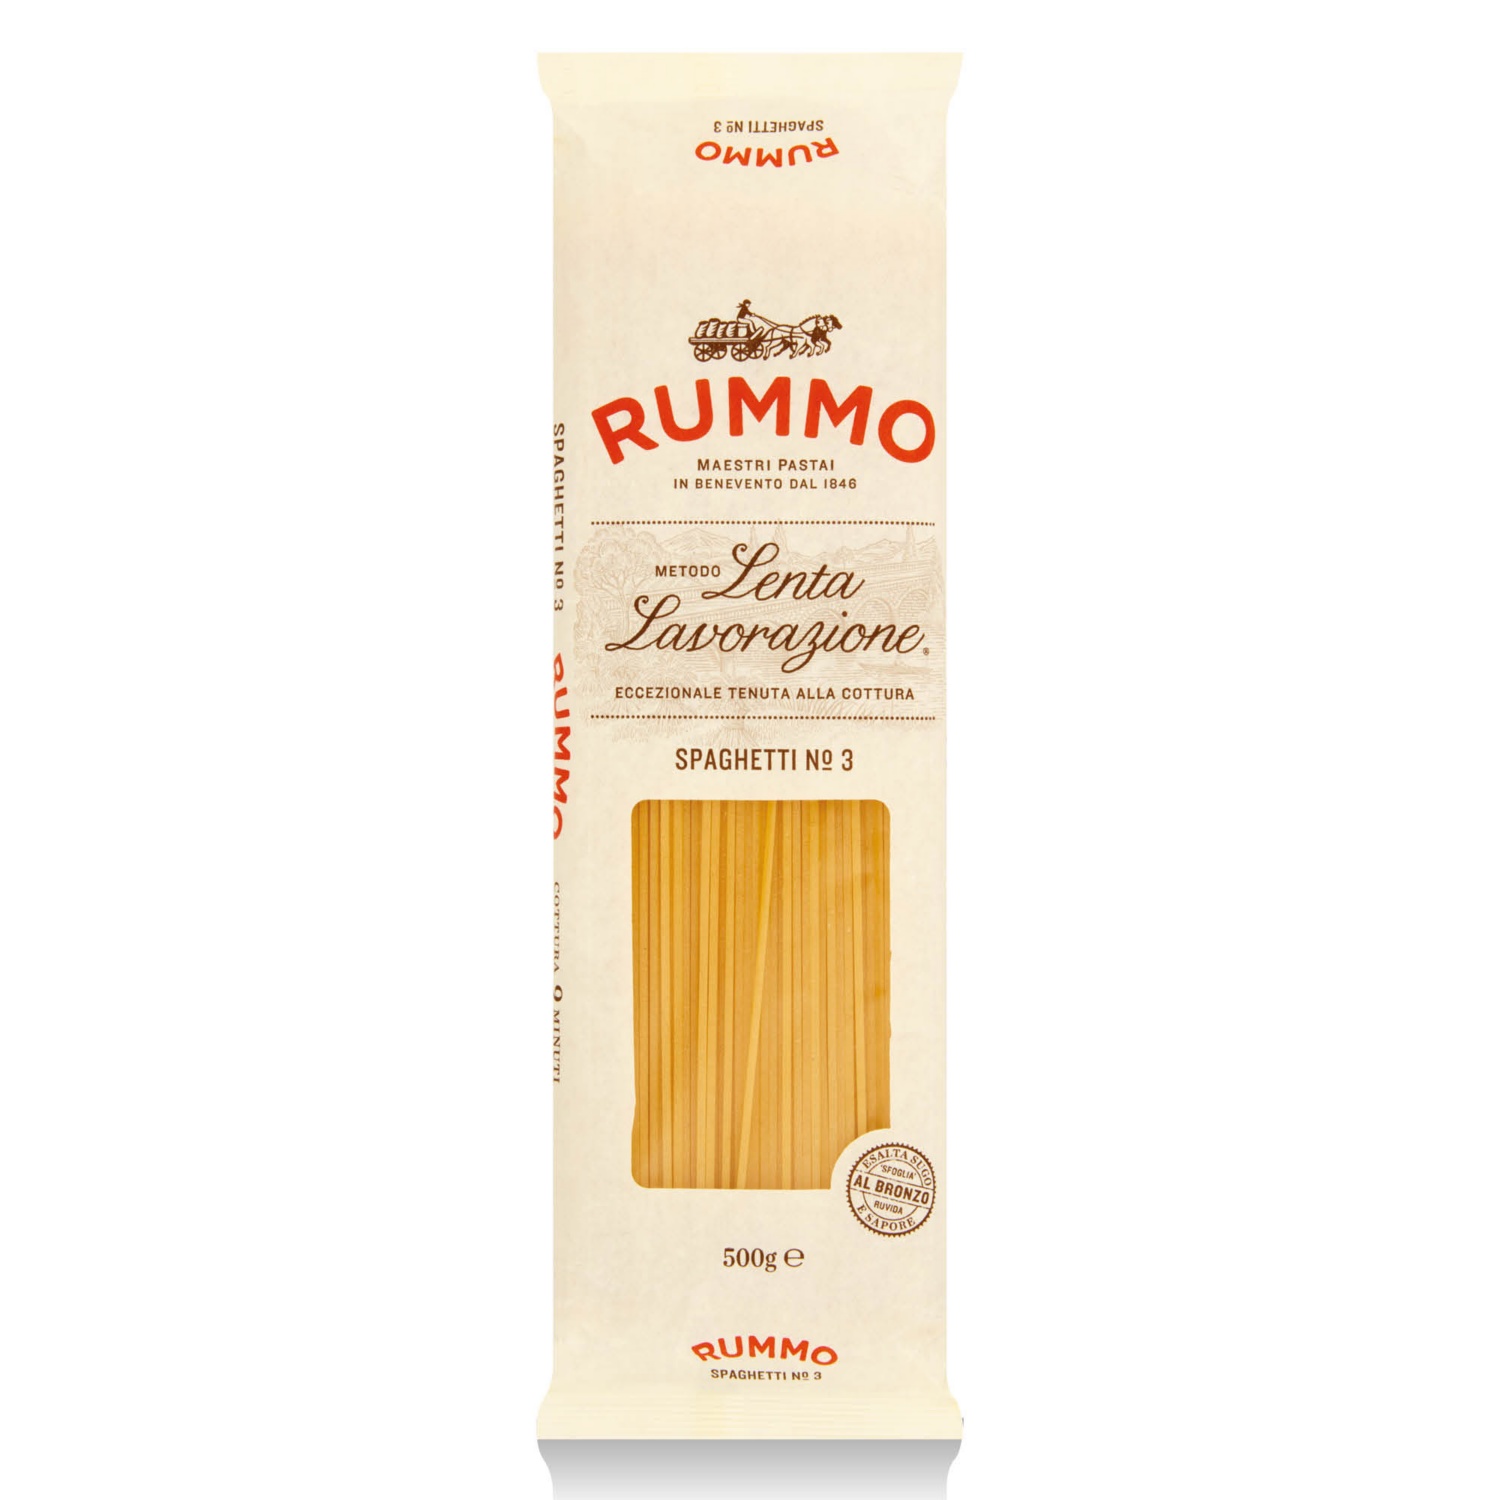 RUMMO Durum száraztészta 500 g, Spaghetti